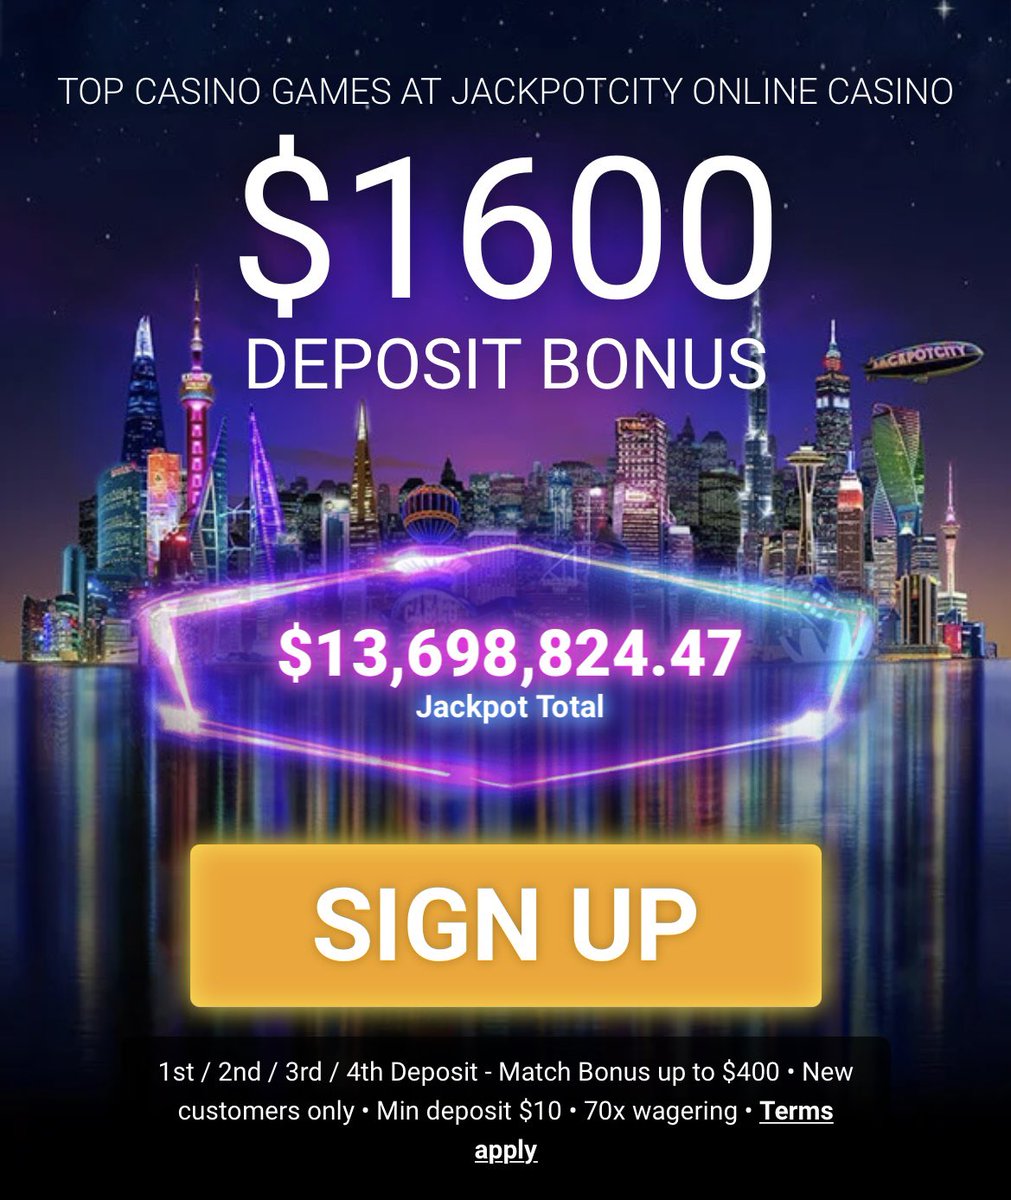 Enjoy $1600 Deposit Bonus and TOP casino games at JackpotCity

Join here: 

